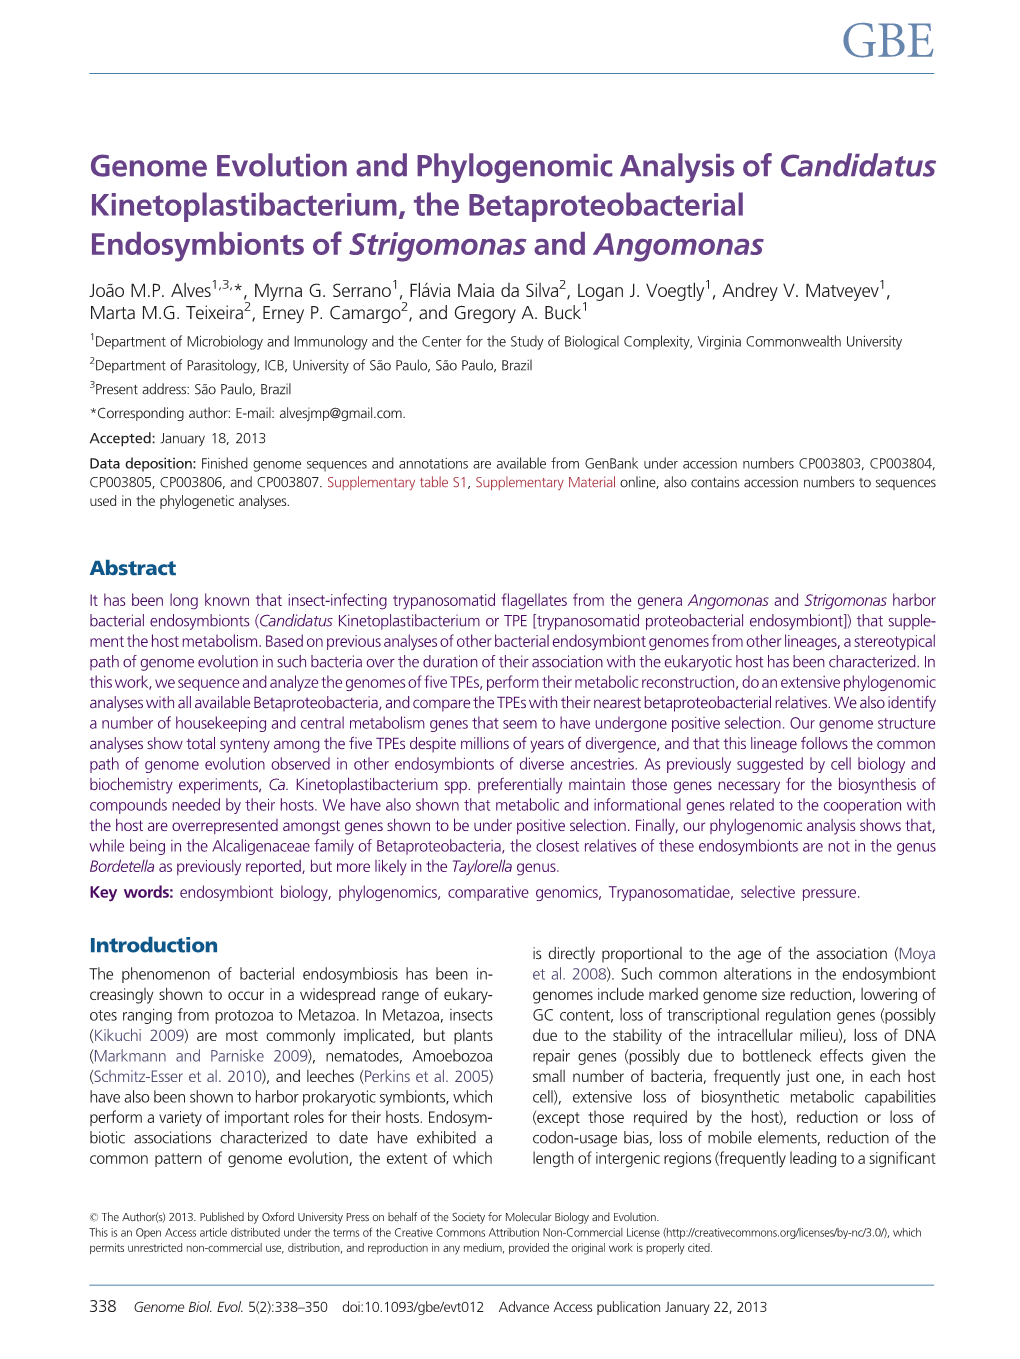 Genome Evolution and Phylogenomic Analysis of Candidatus Kinetoplastibacterium, the Betaproteobacterial Endosymbionts of Strigomonas and Angomonas